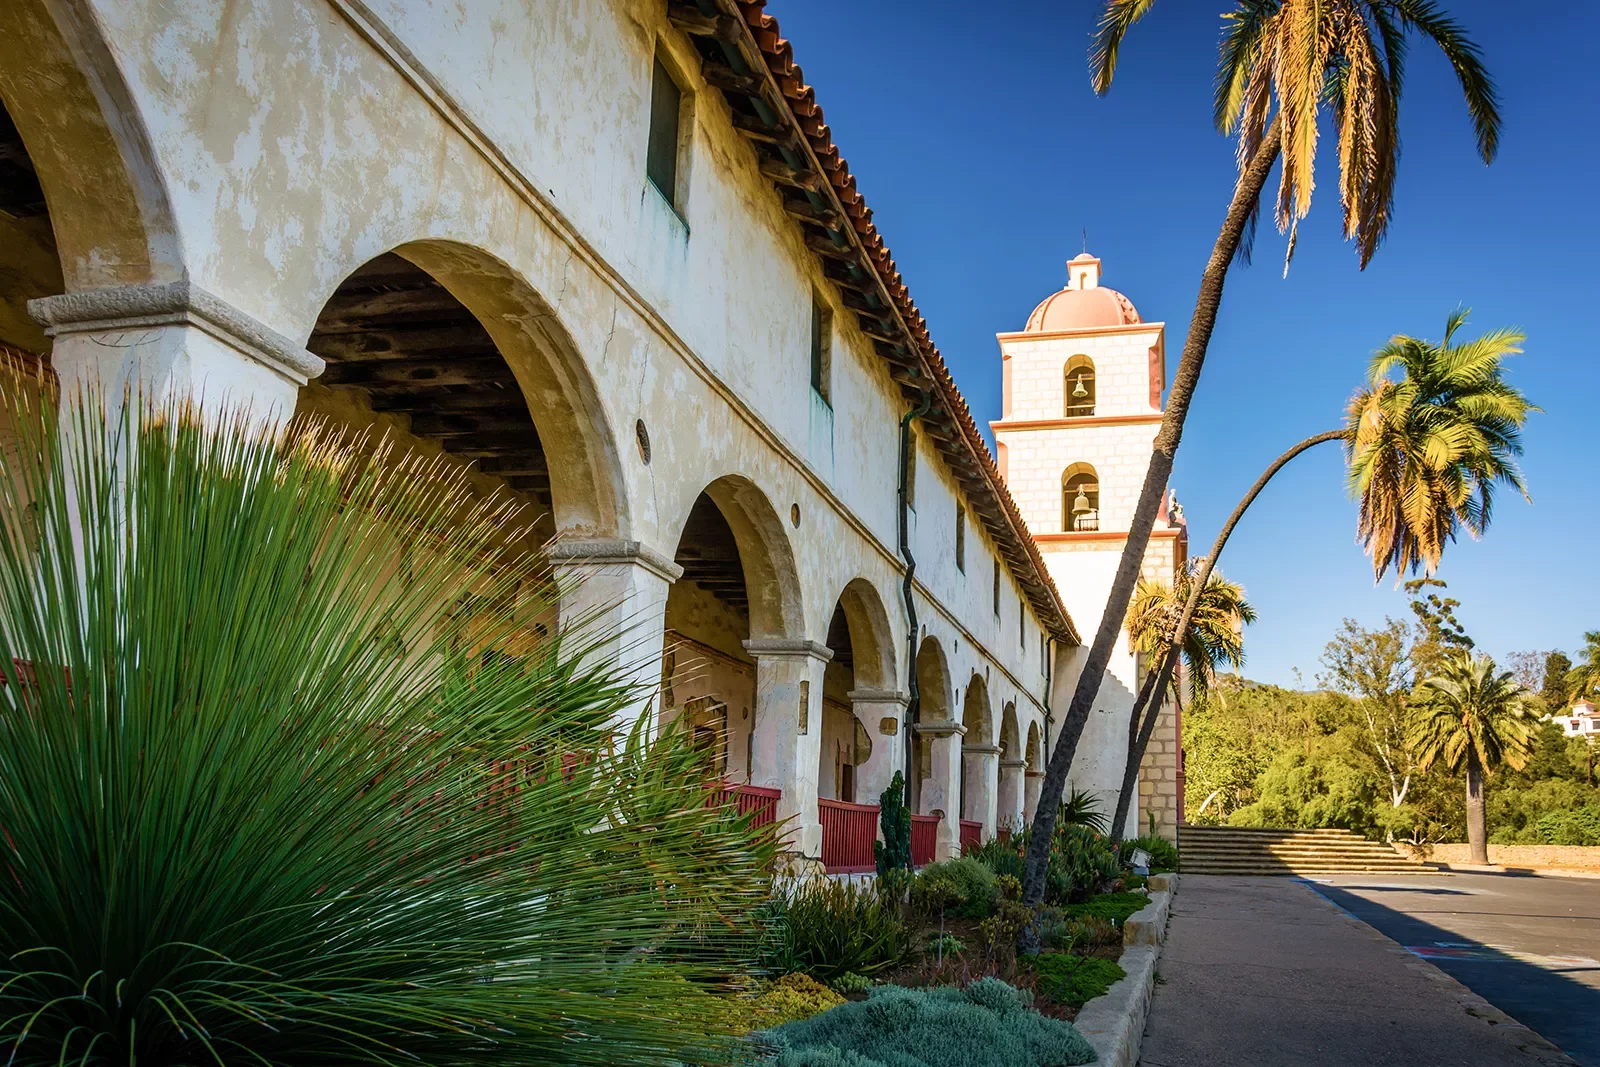 Shot of old mission building in Santa Barbara.